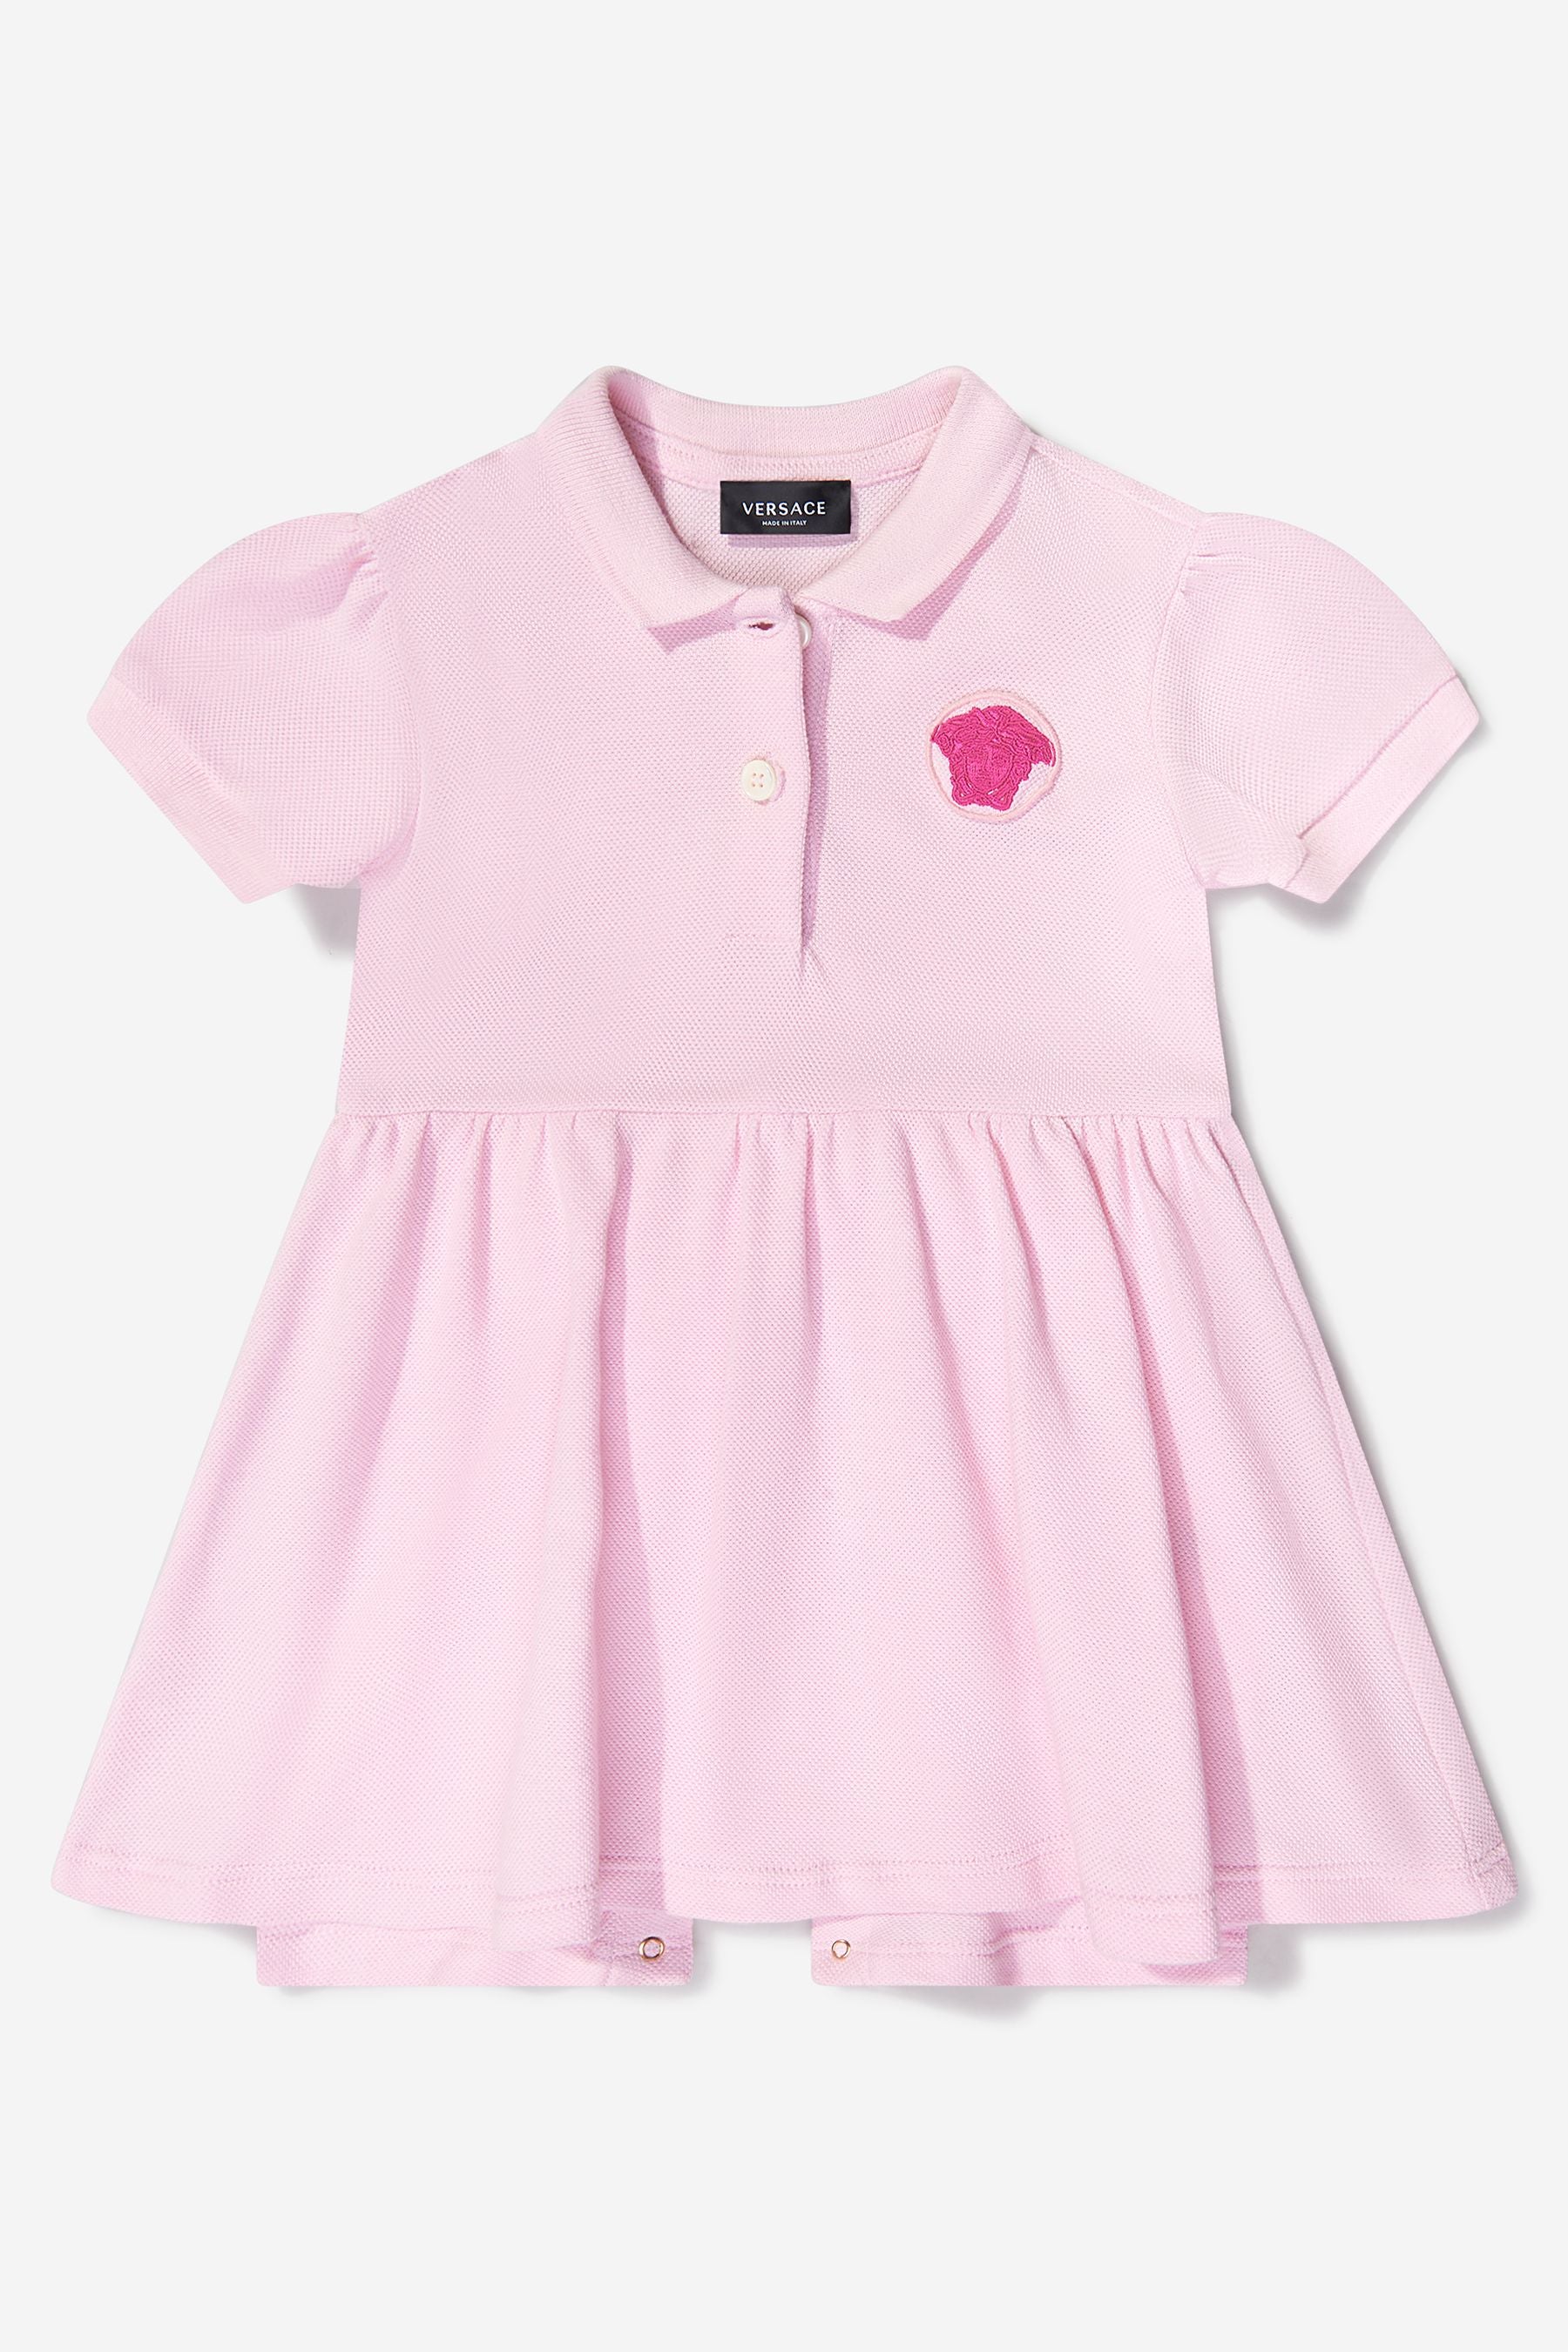 Versace - Baby Girls Cotton Medusa Logo Romper | Childsplay Clothing